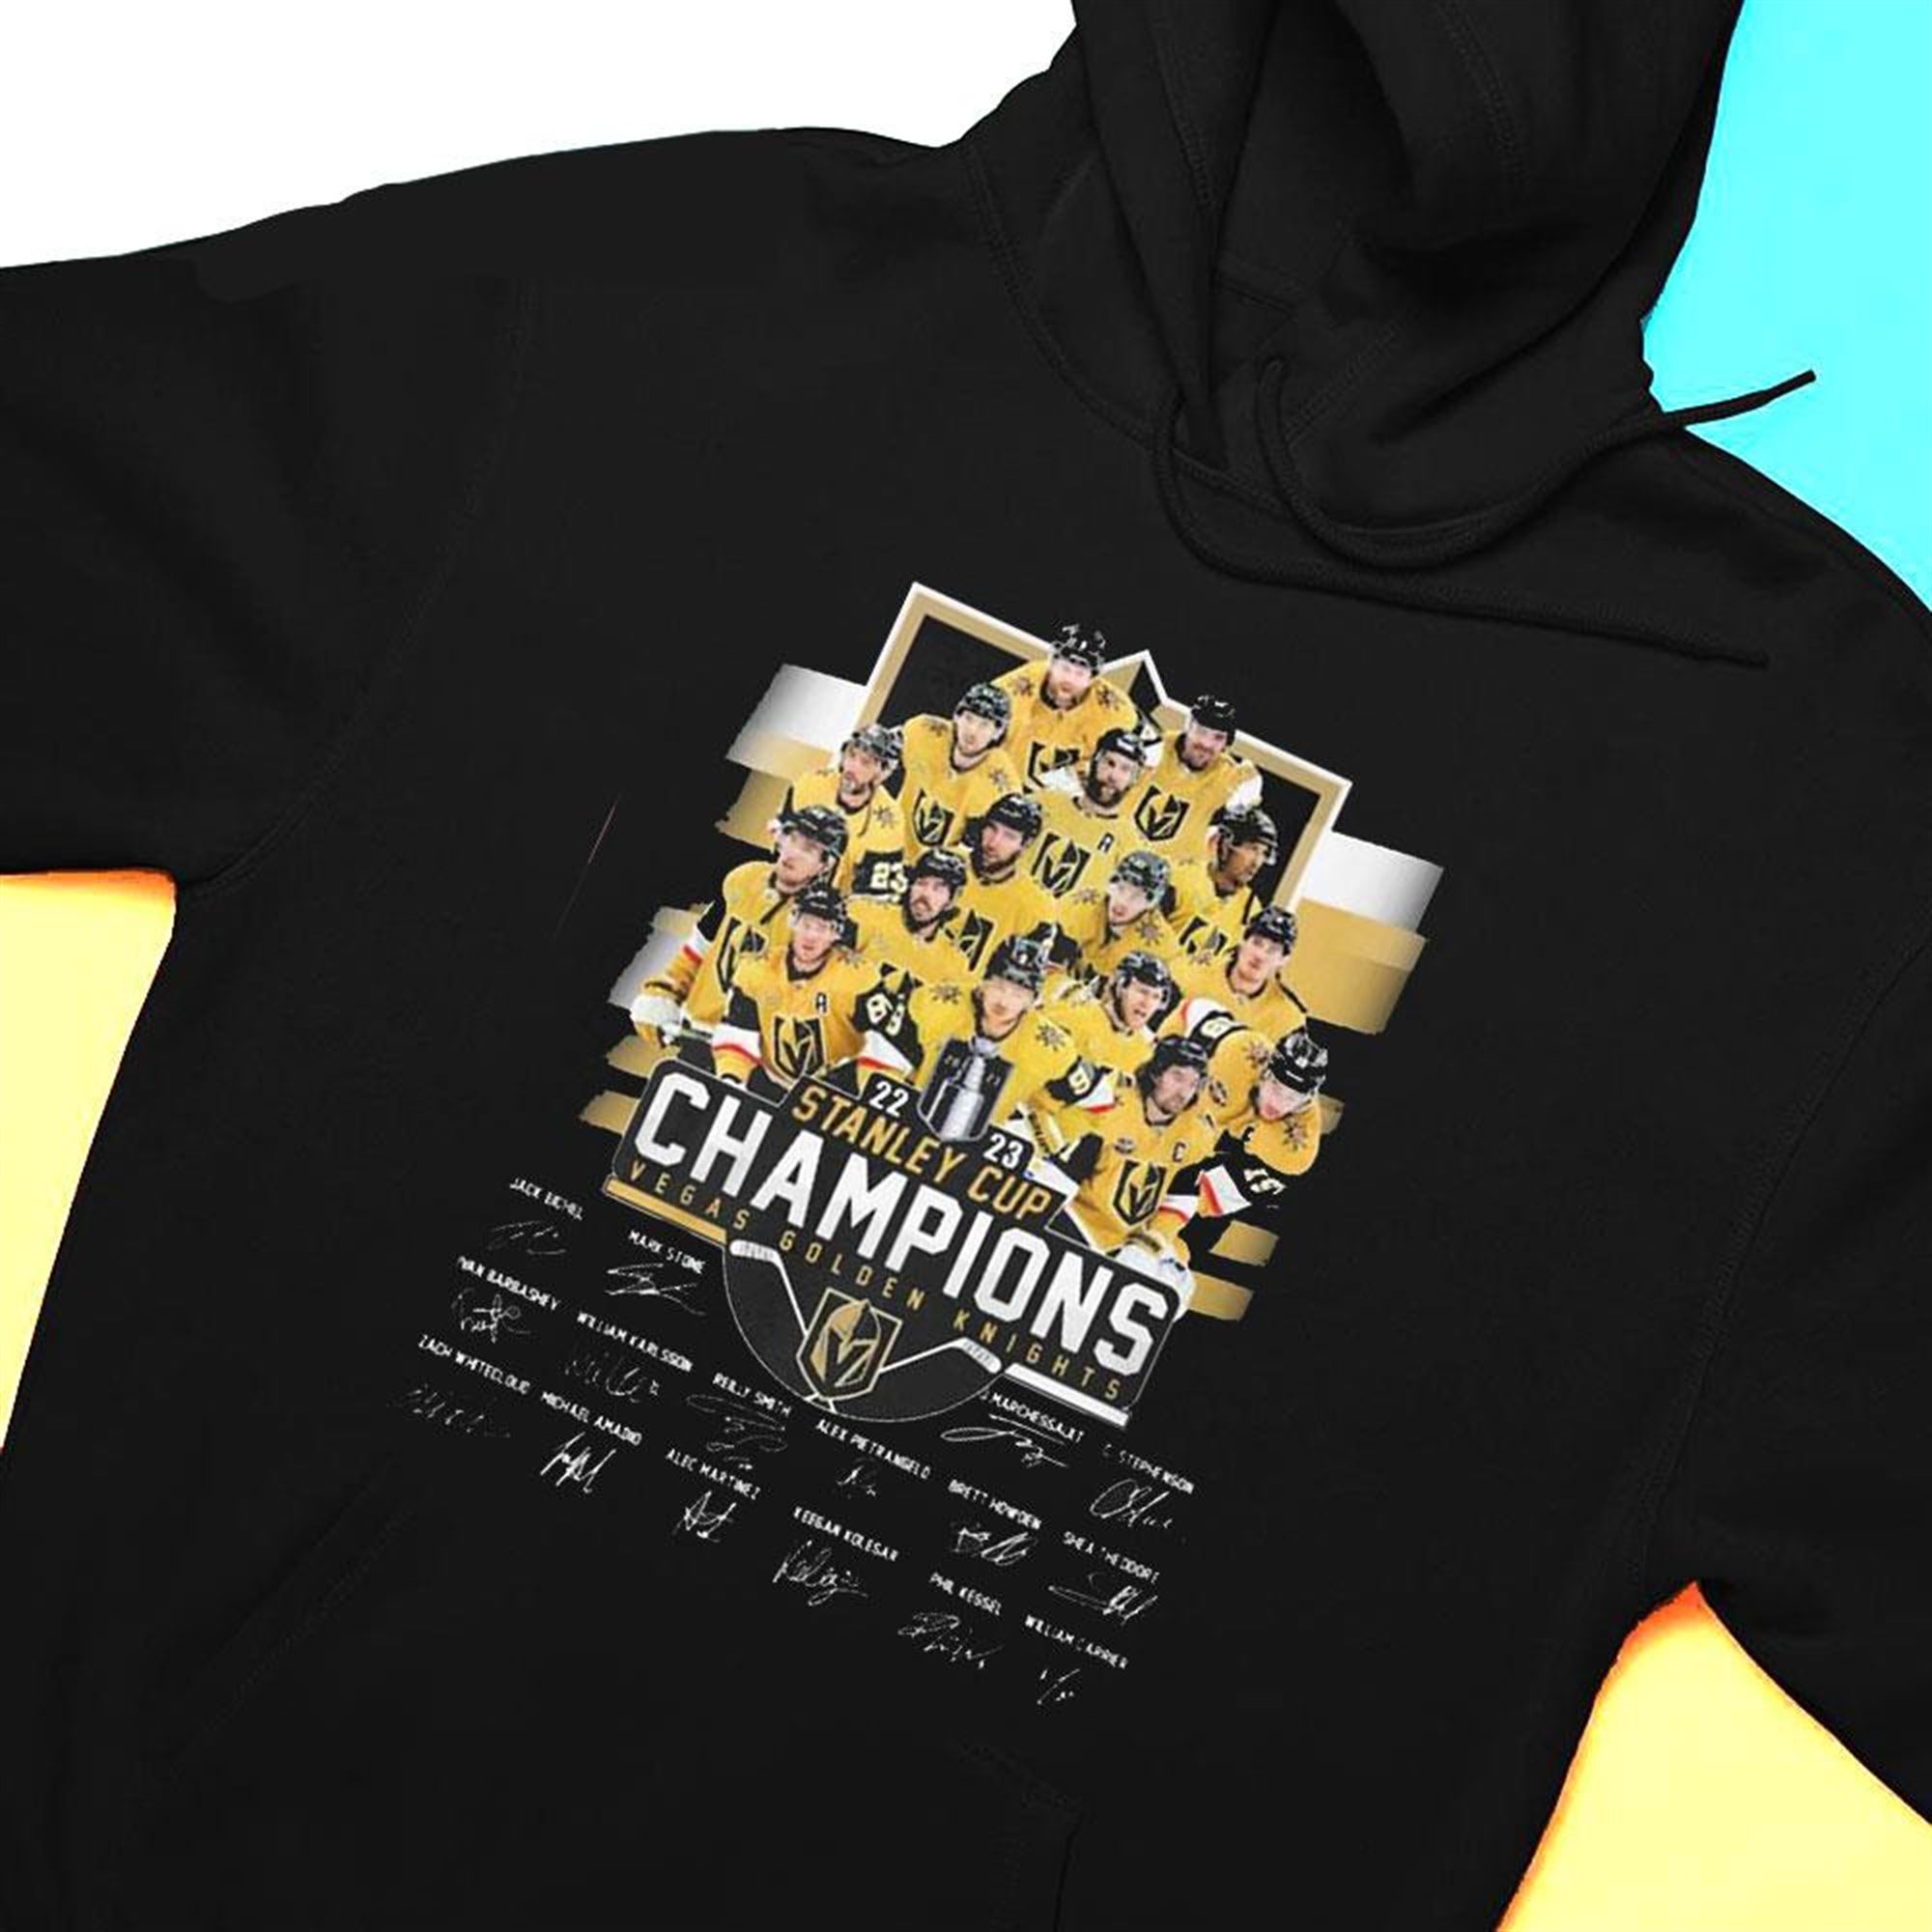 Cheap 2023 Stanley Cup Champs Vegas Golden Knights Shirt, hoodie